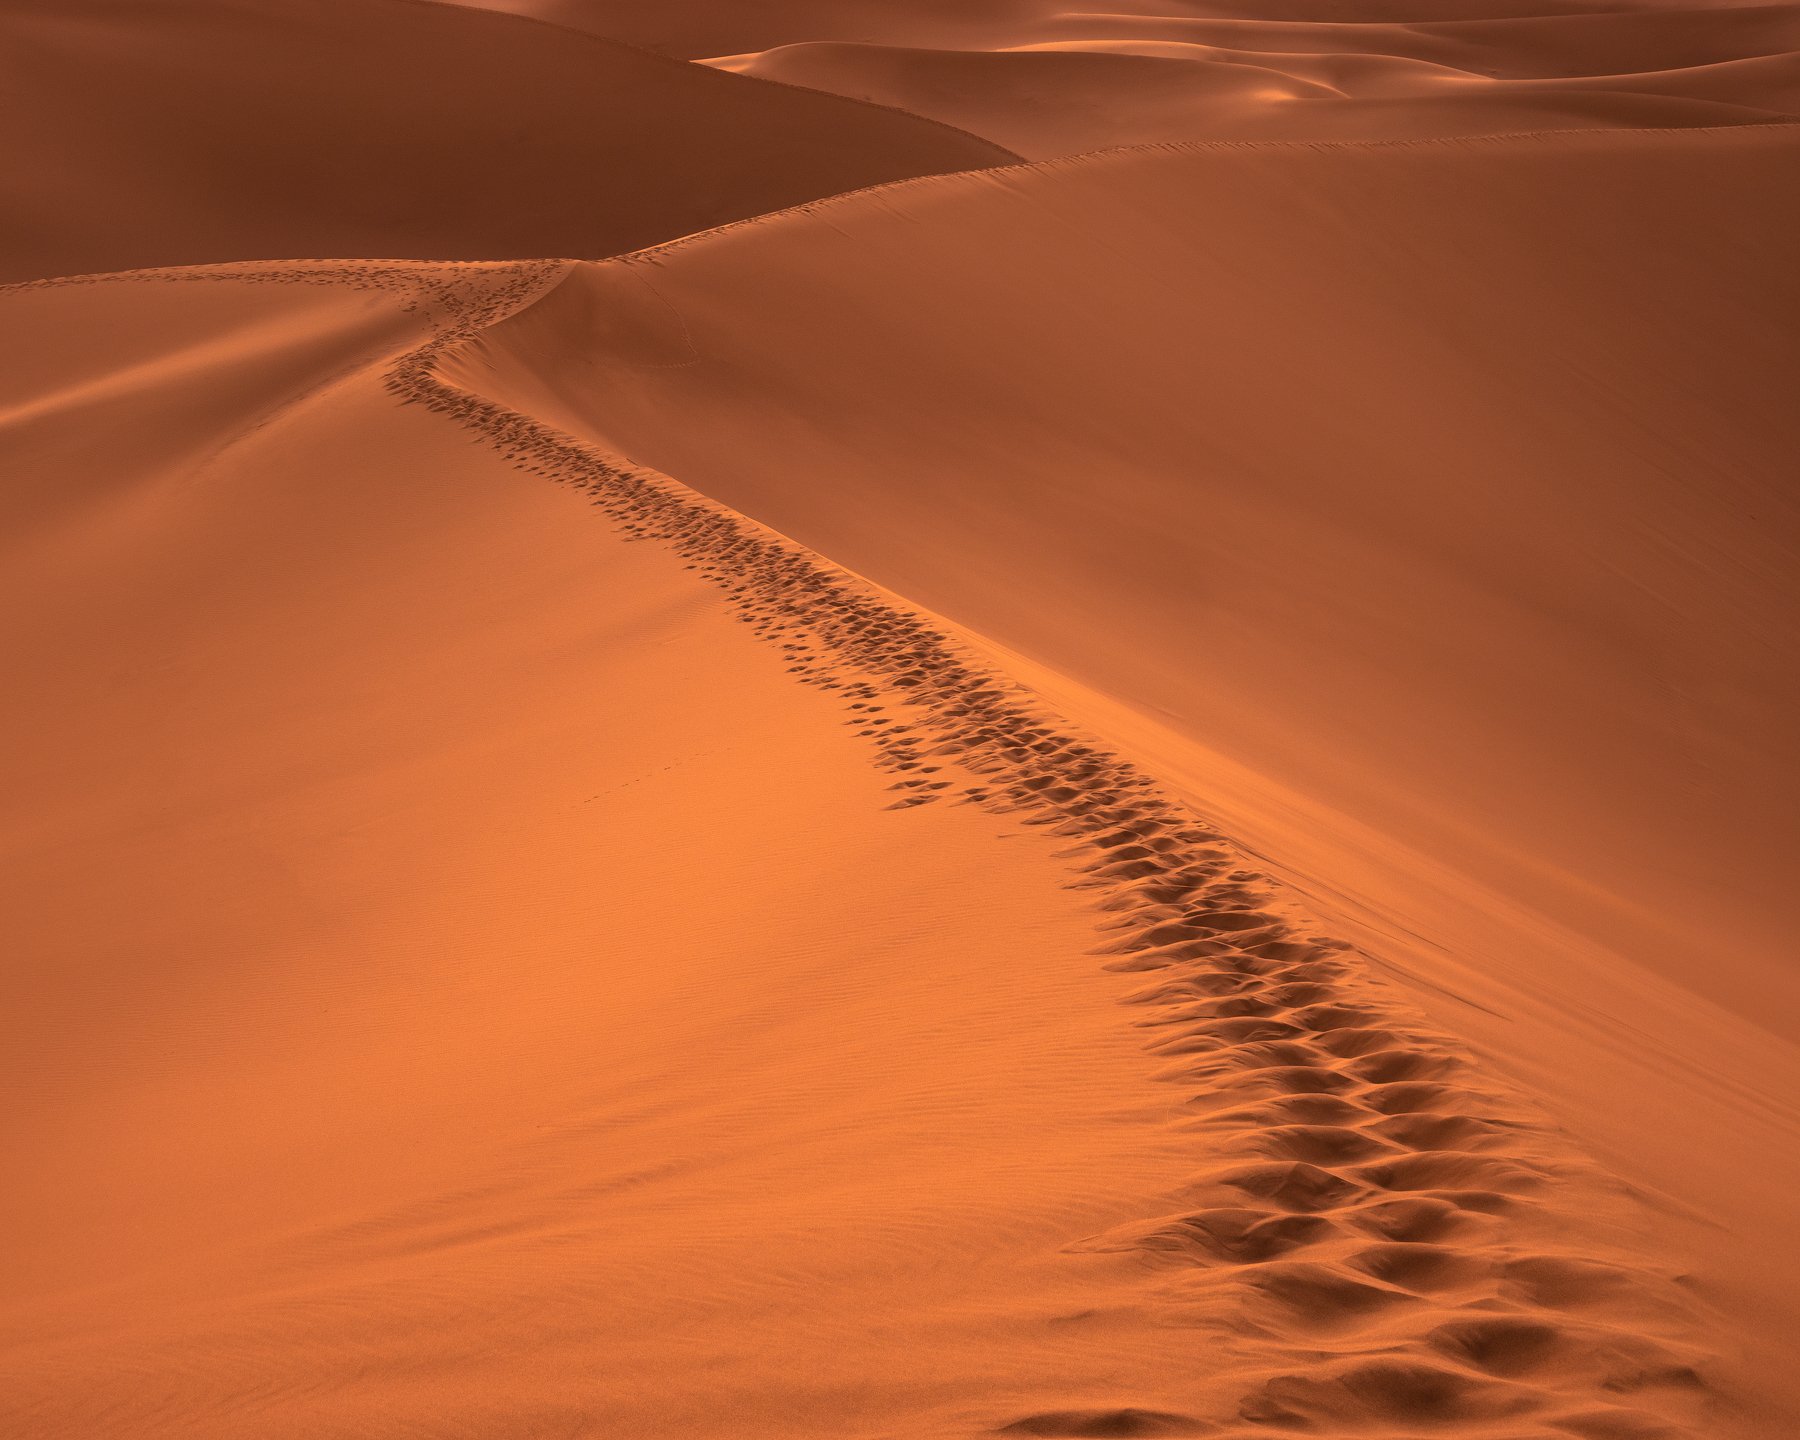 Sahara, Sand, Marks, Maroc, Prybinski Miroslaw